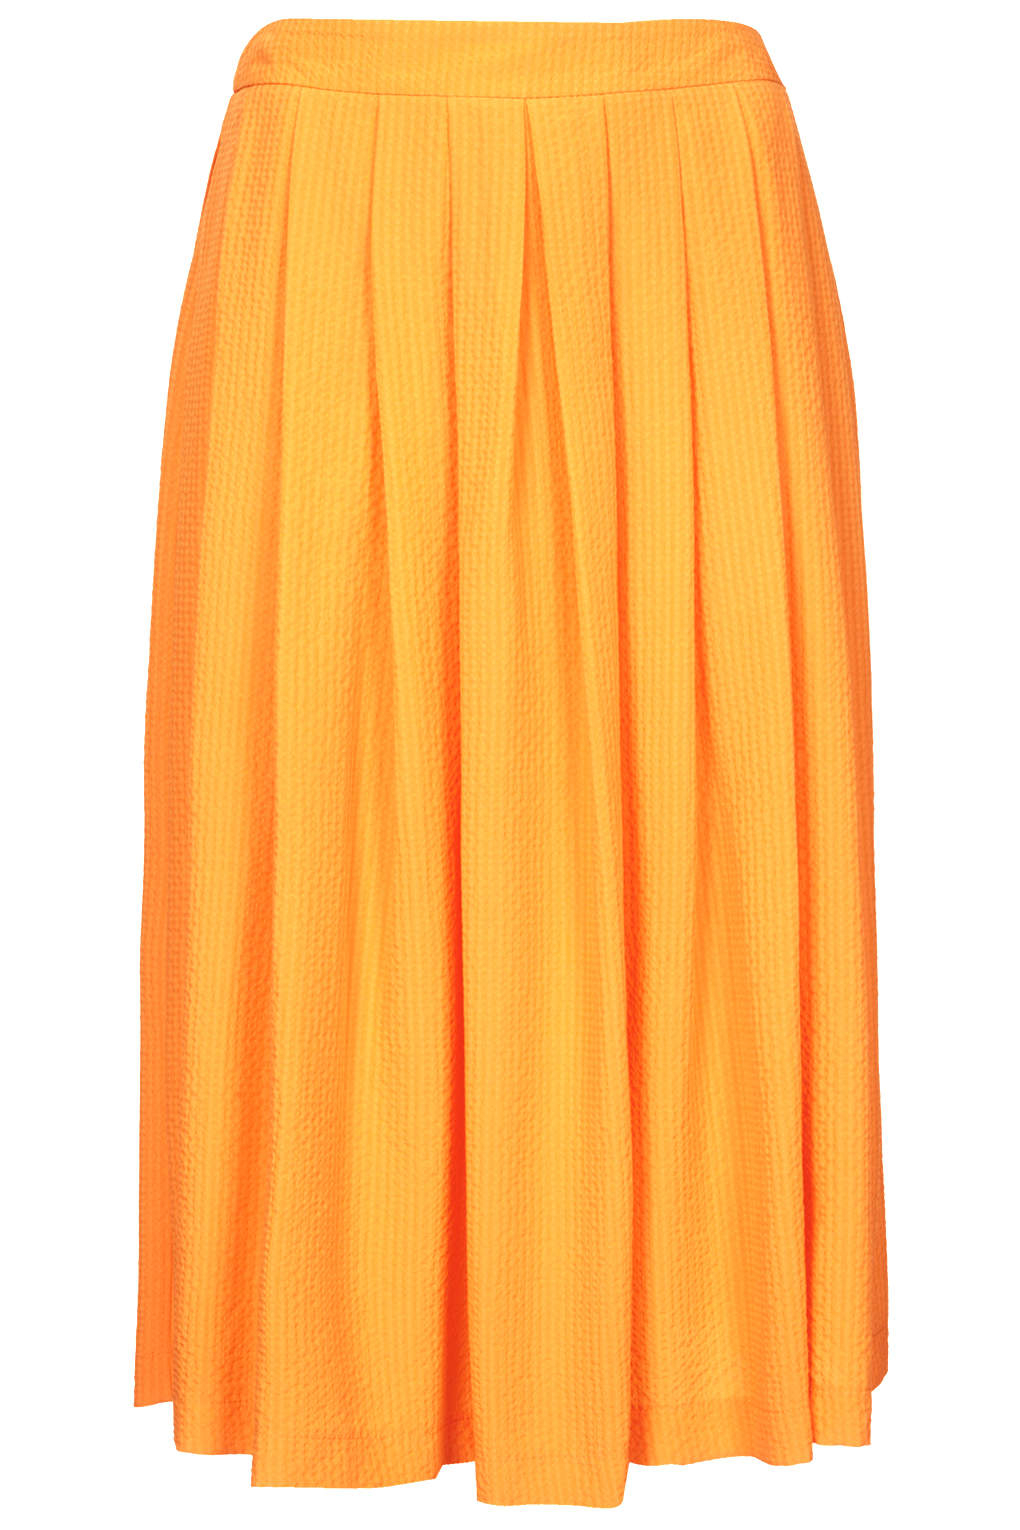 Topshop Petite Full Midi Skirt in Yellow | Lyst